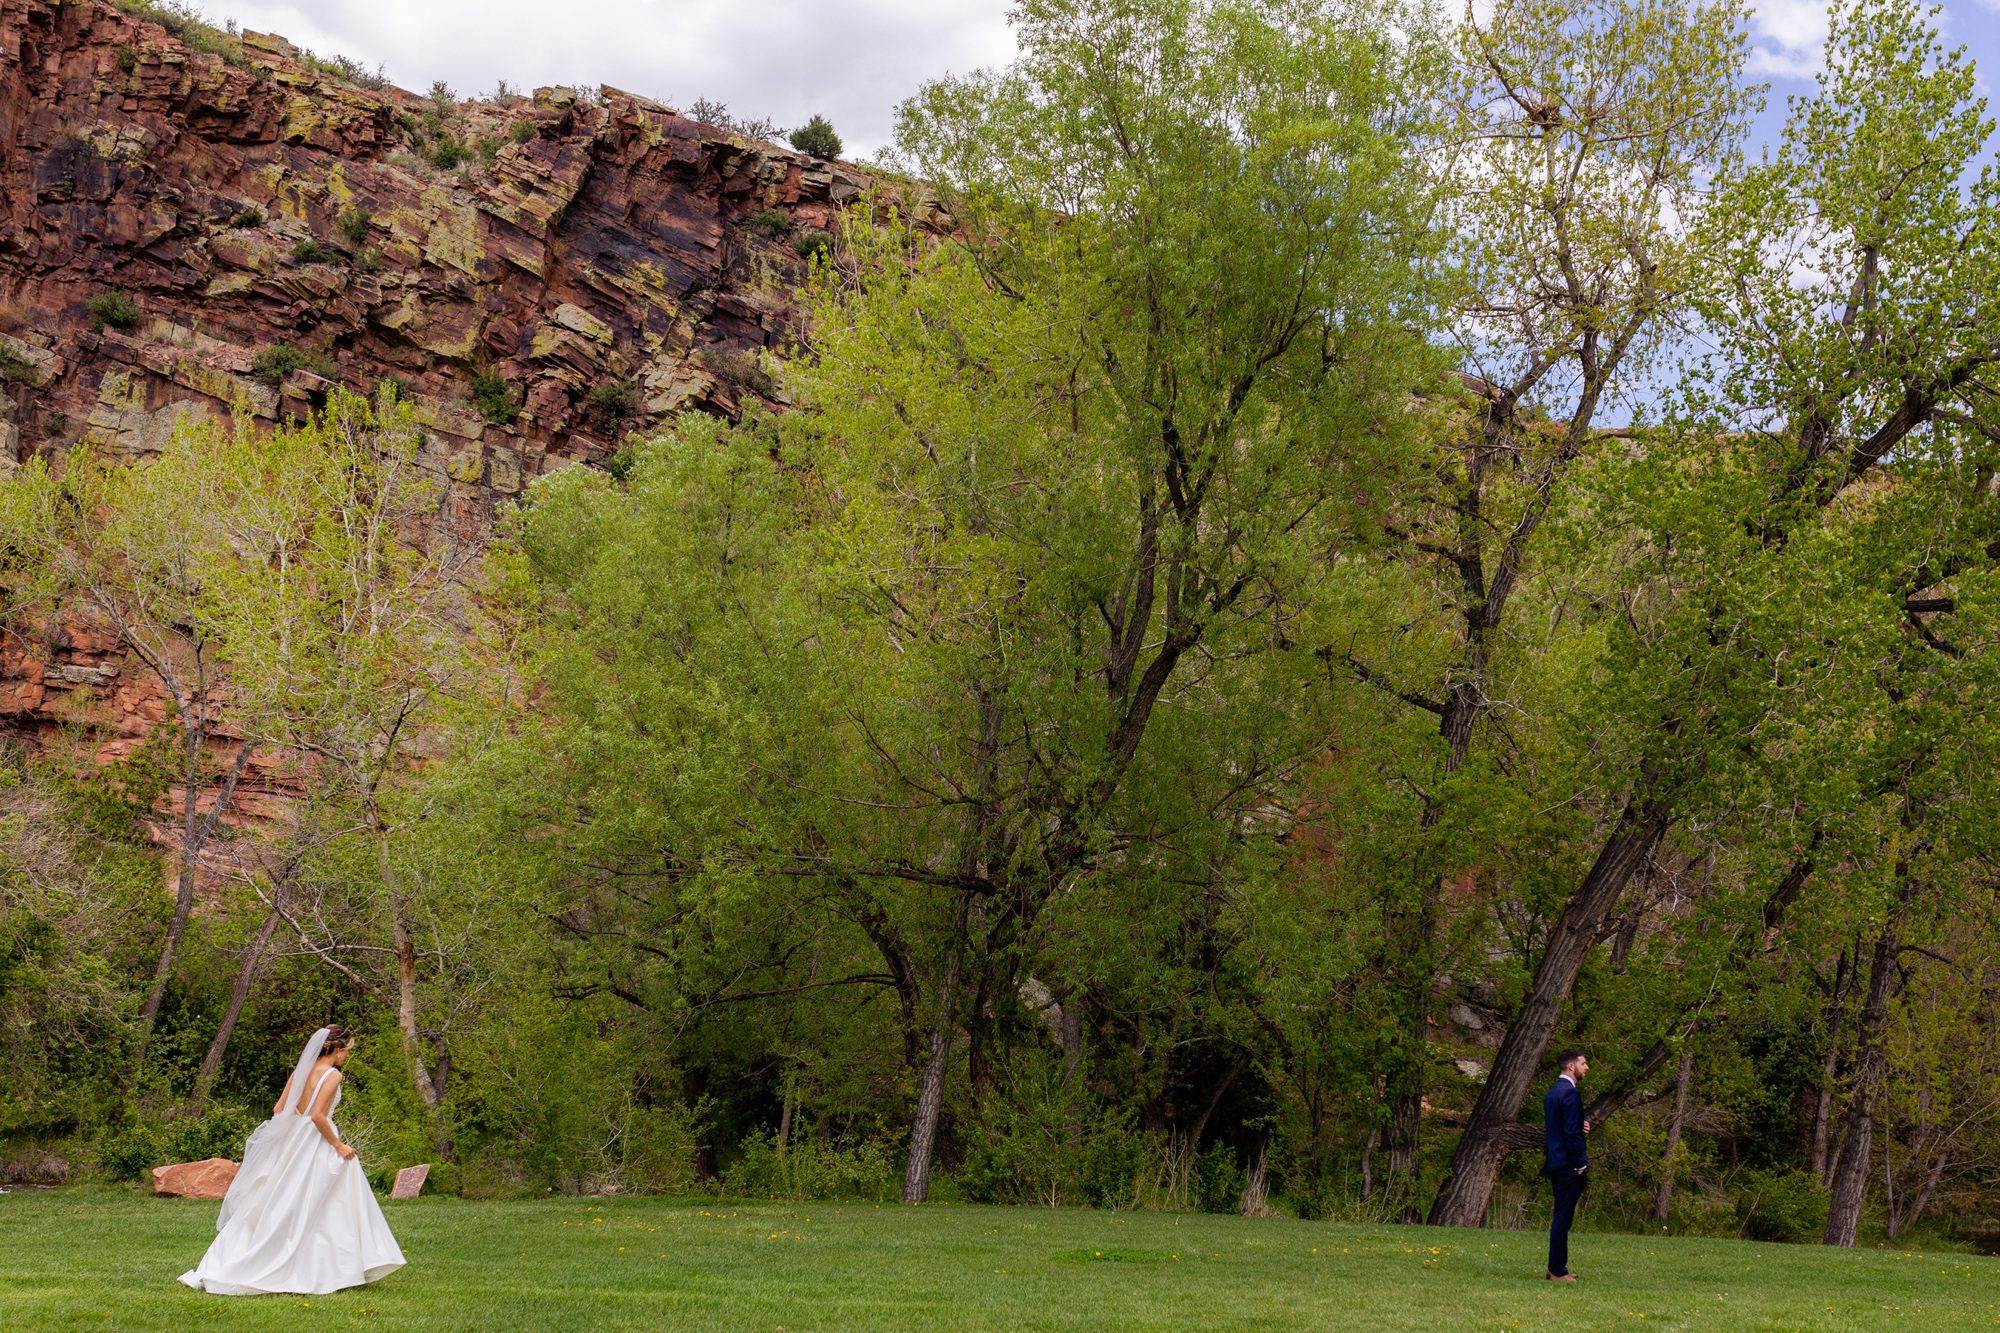 Planet Bluegrass Wedding venue in Lyons Colorado: Colorado Wedding Photographer, First look with Bride and Groom